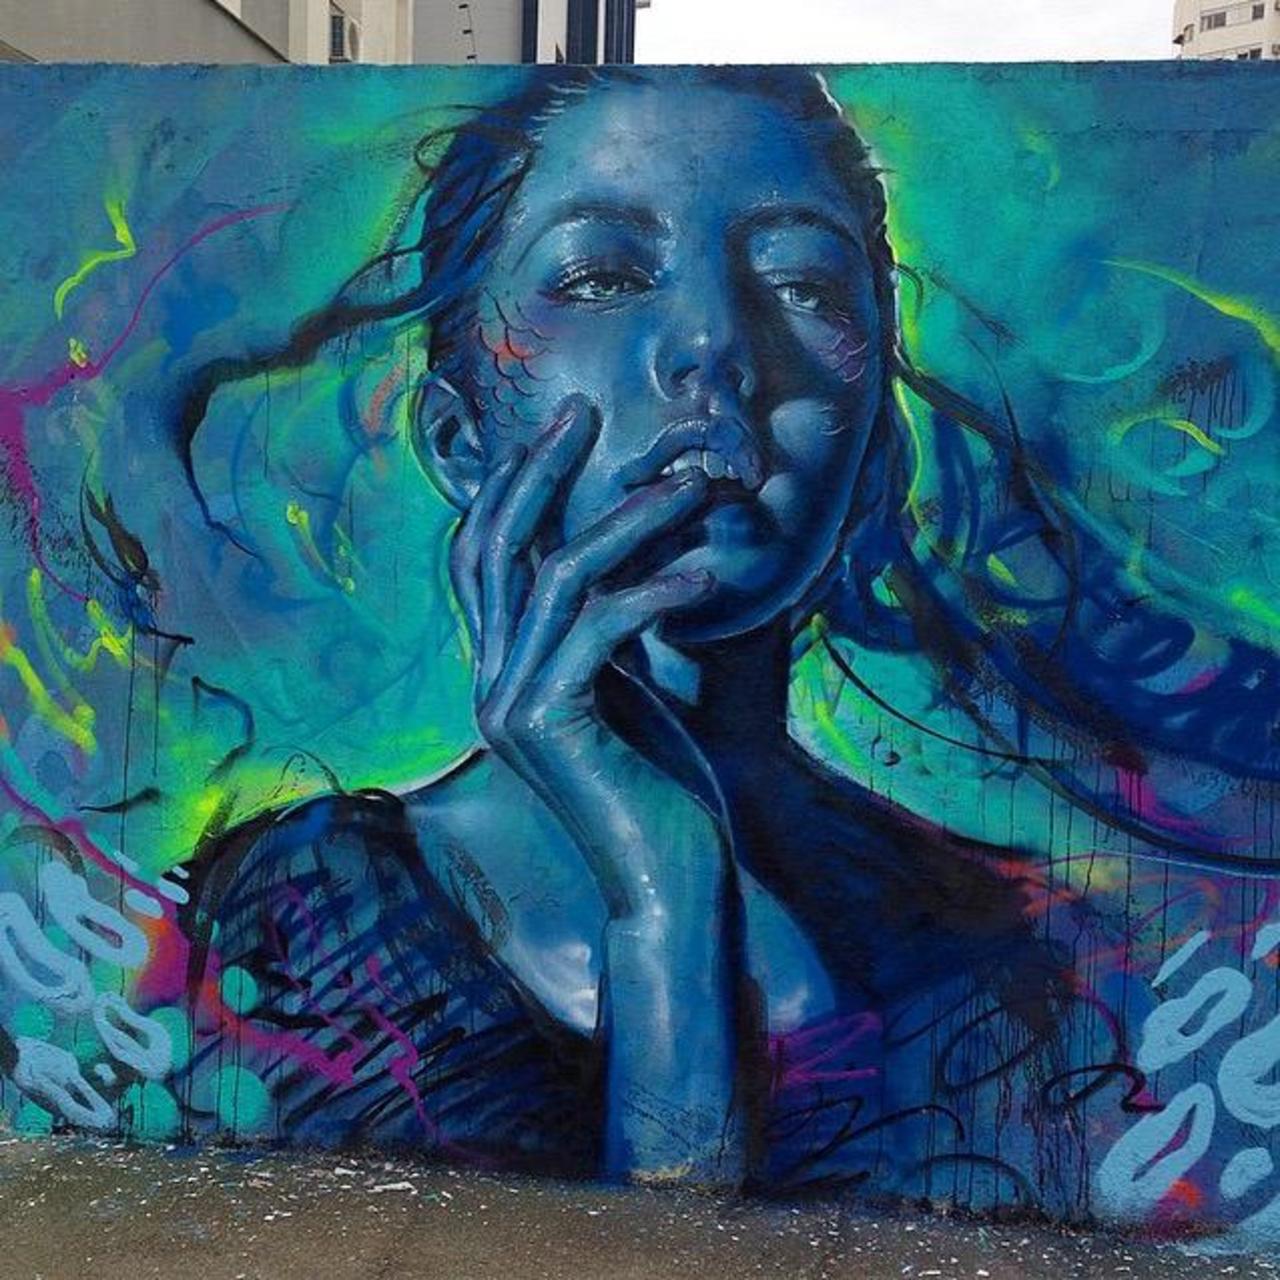 RT @charlesjackso14: Thiago Valdi new Street Art piece titled 'Day Dreamer' #art #mural #graffiti #streetart http://t.co/3UodbQm48I …… http://twitter.com/GoogleStreetArt/status/652604458048876544/photo/1/large?utm_source=fb&utm_medium=fb&utm_campaign=charlesjackso14&utm_content=652728478597545984